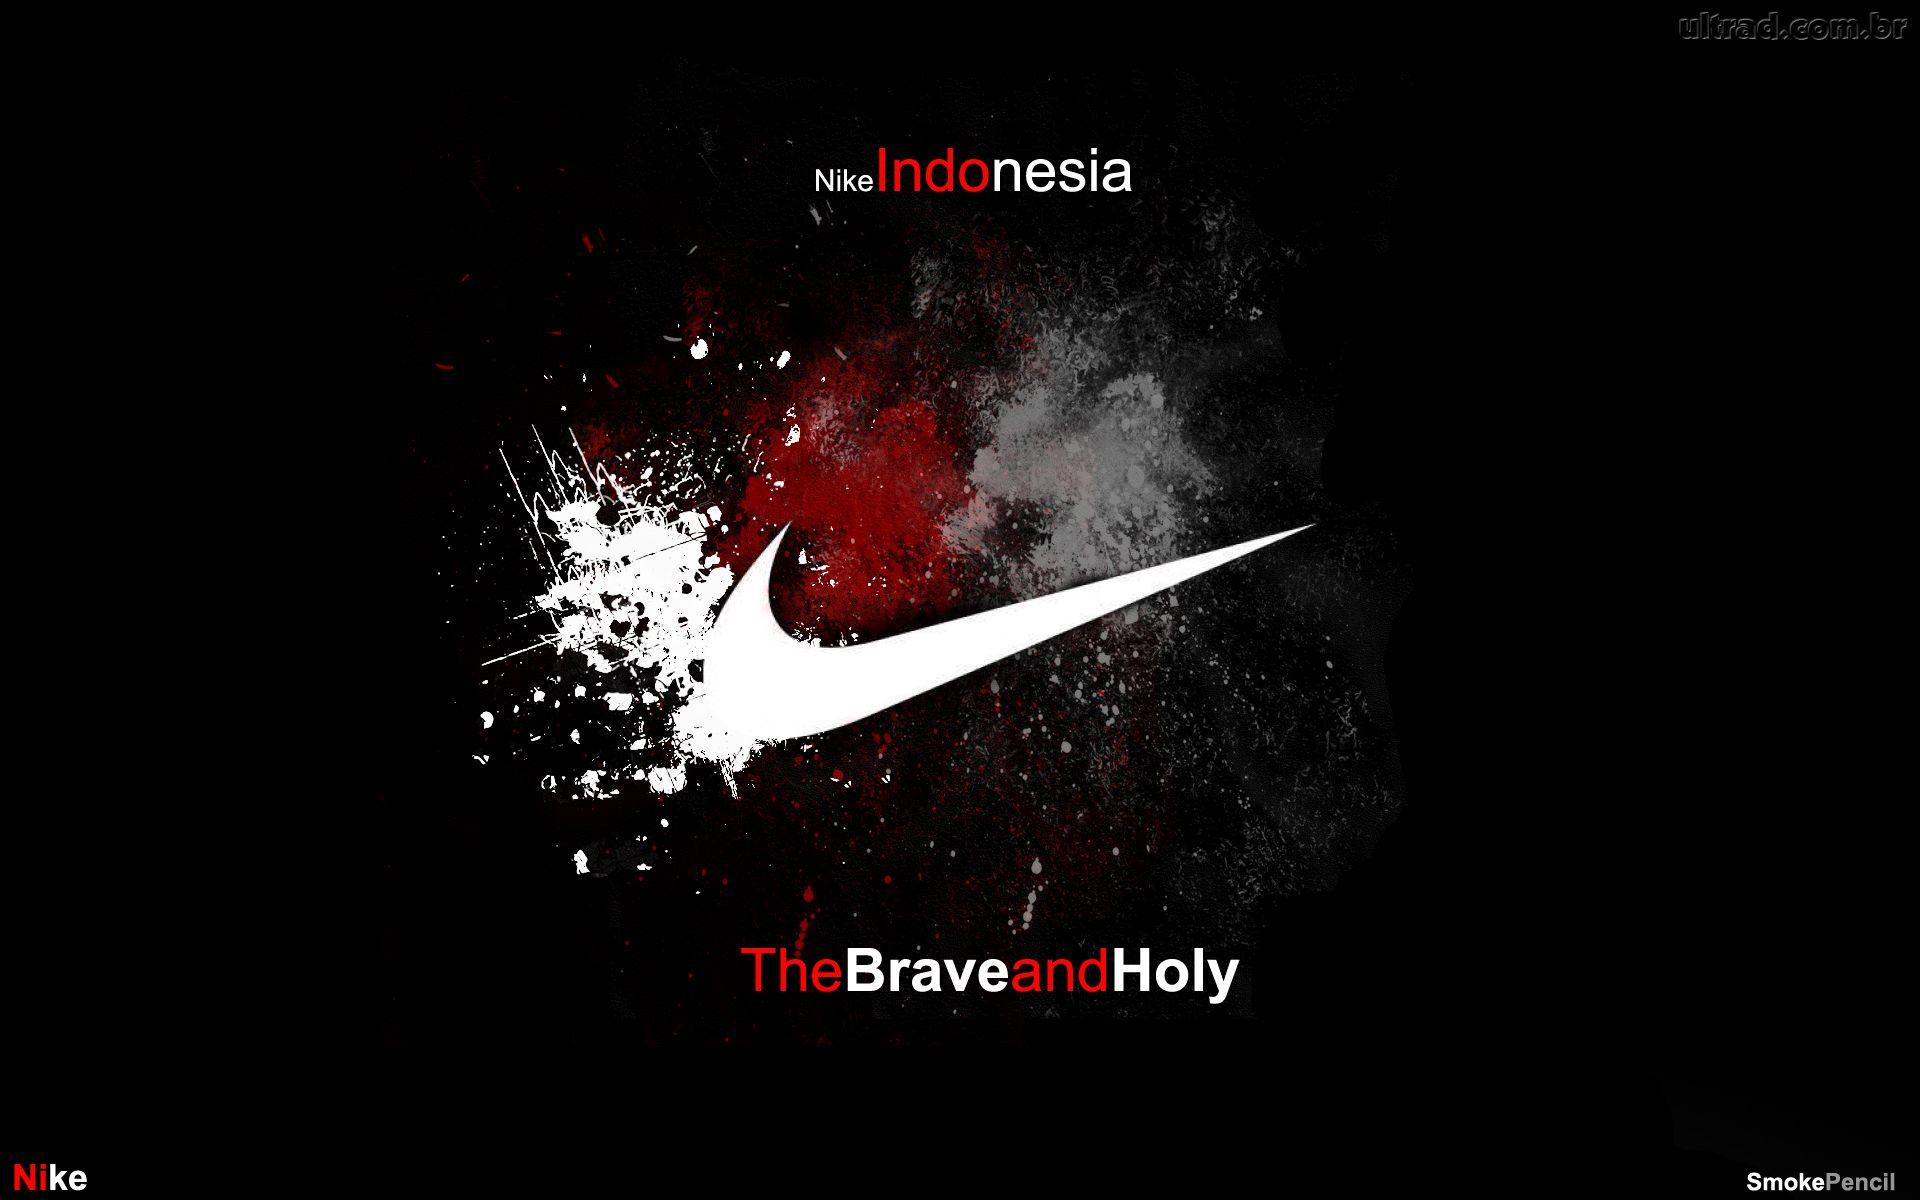 Smoke Nike Logo - Download nike logo cool backgrounds images | Desktop Backgrounds for ...